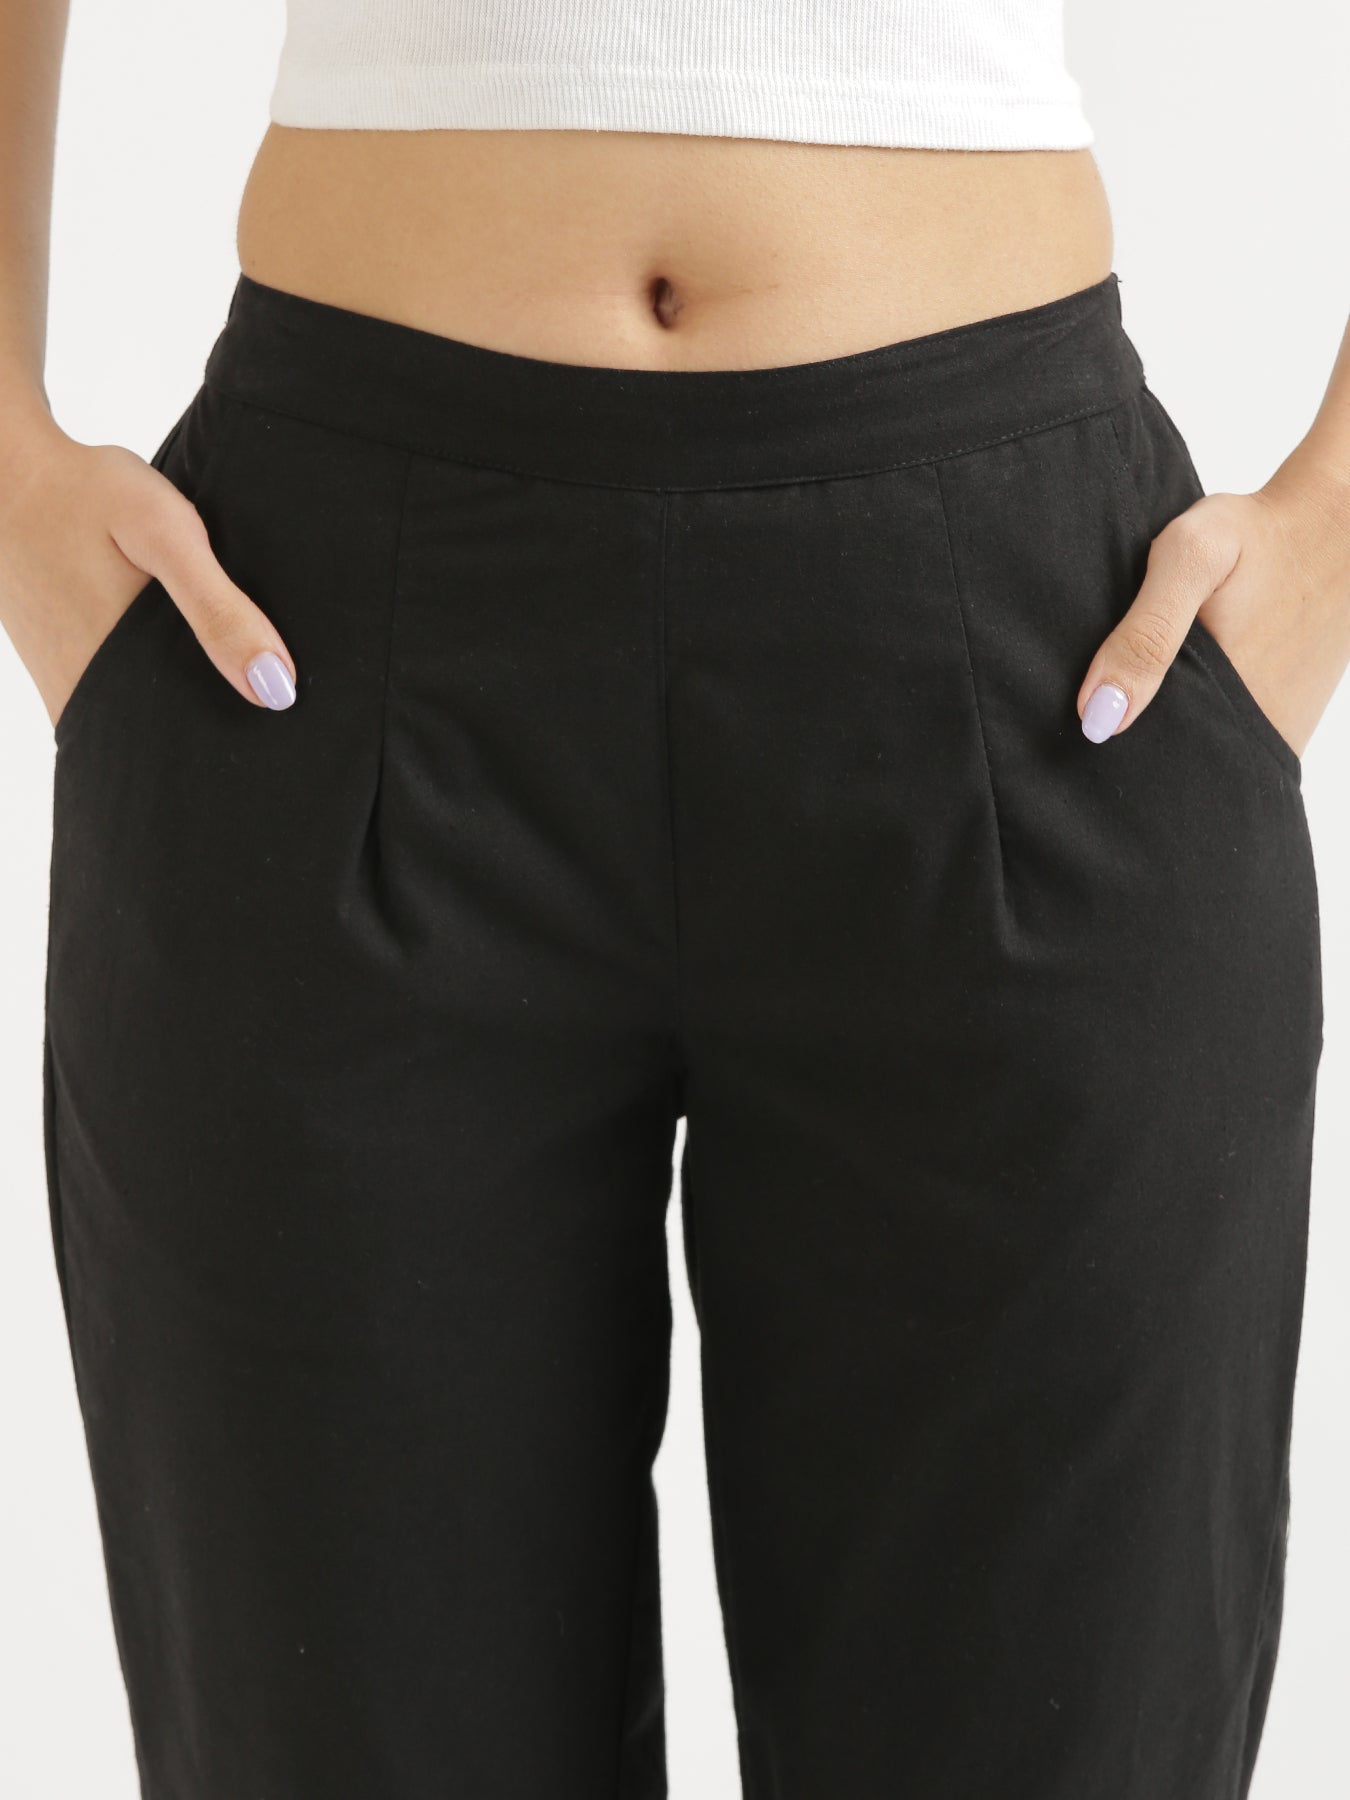 Trauser, pant plazo design 😍  Women trousers design, Pants women